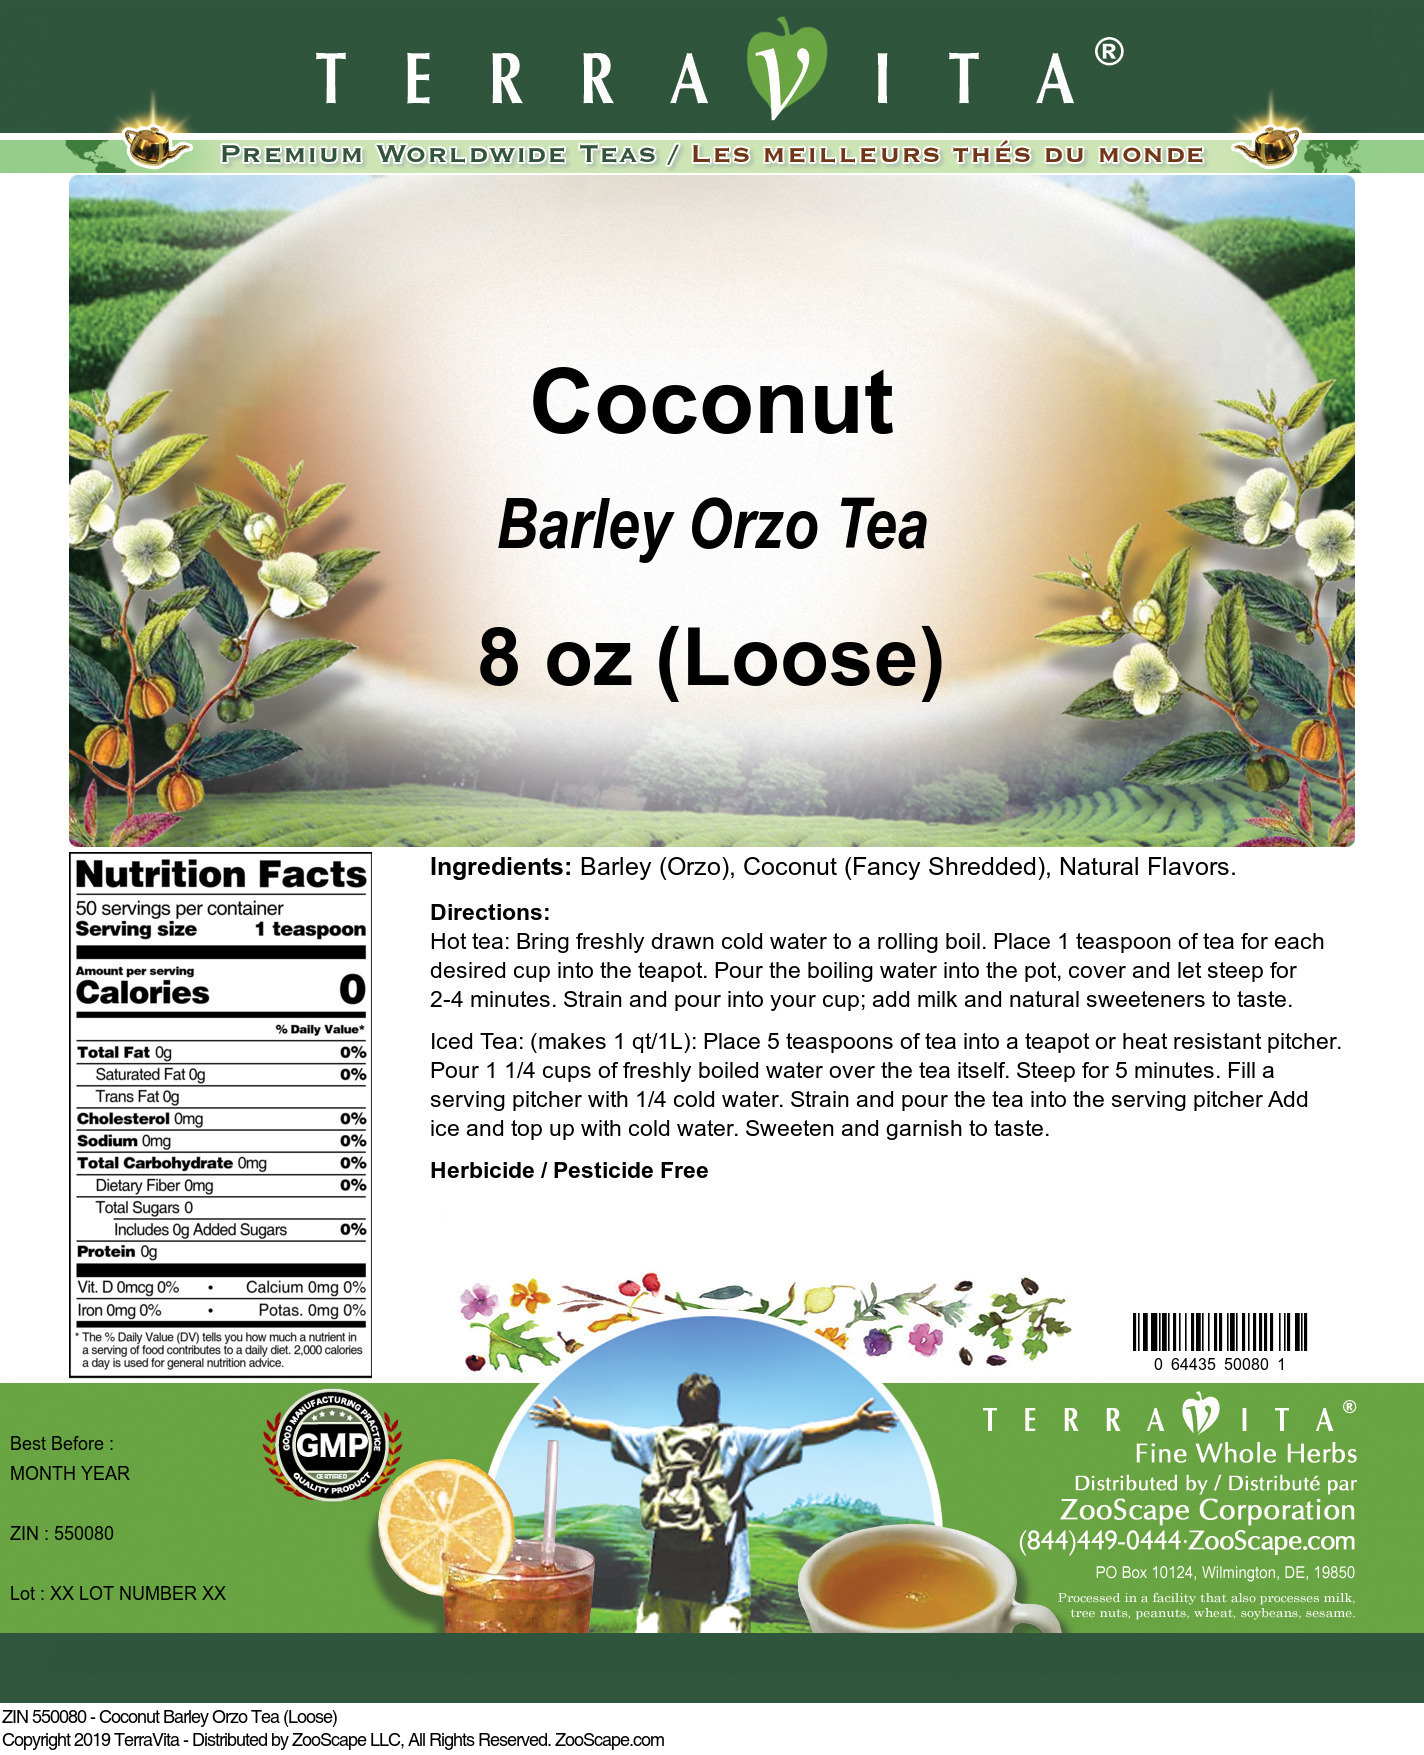 Coconut Barley Orzo Tea (Loose) - Label